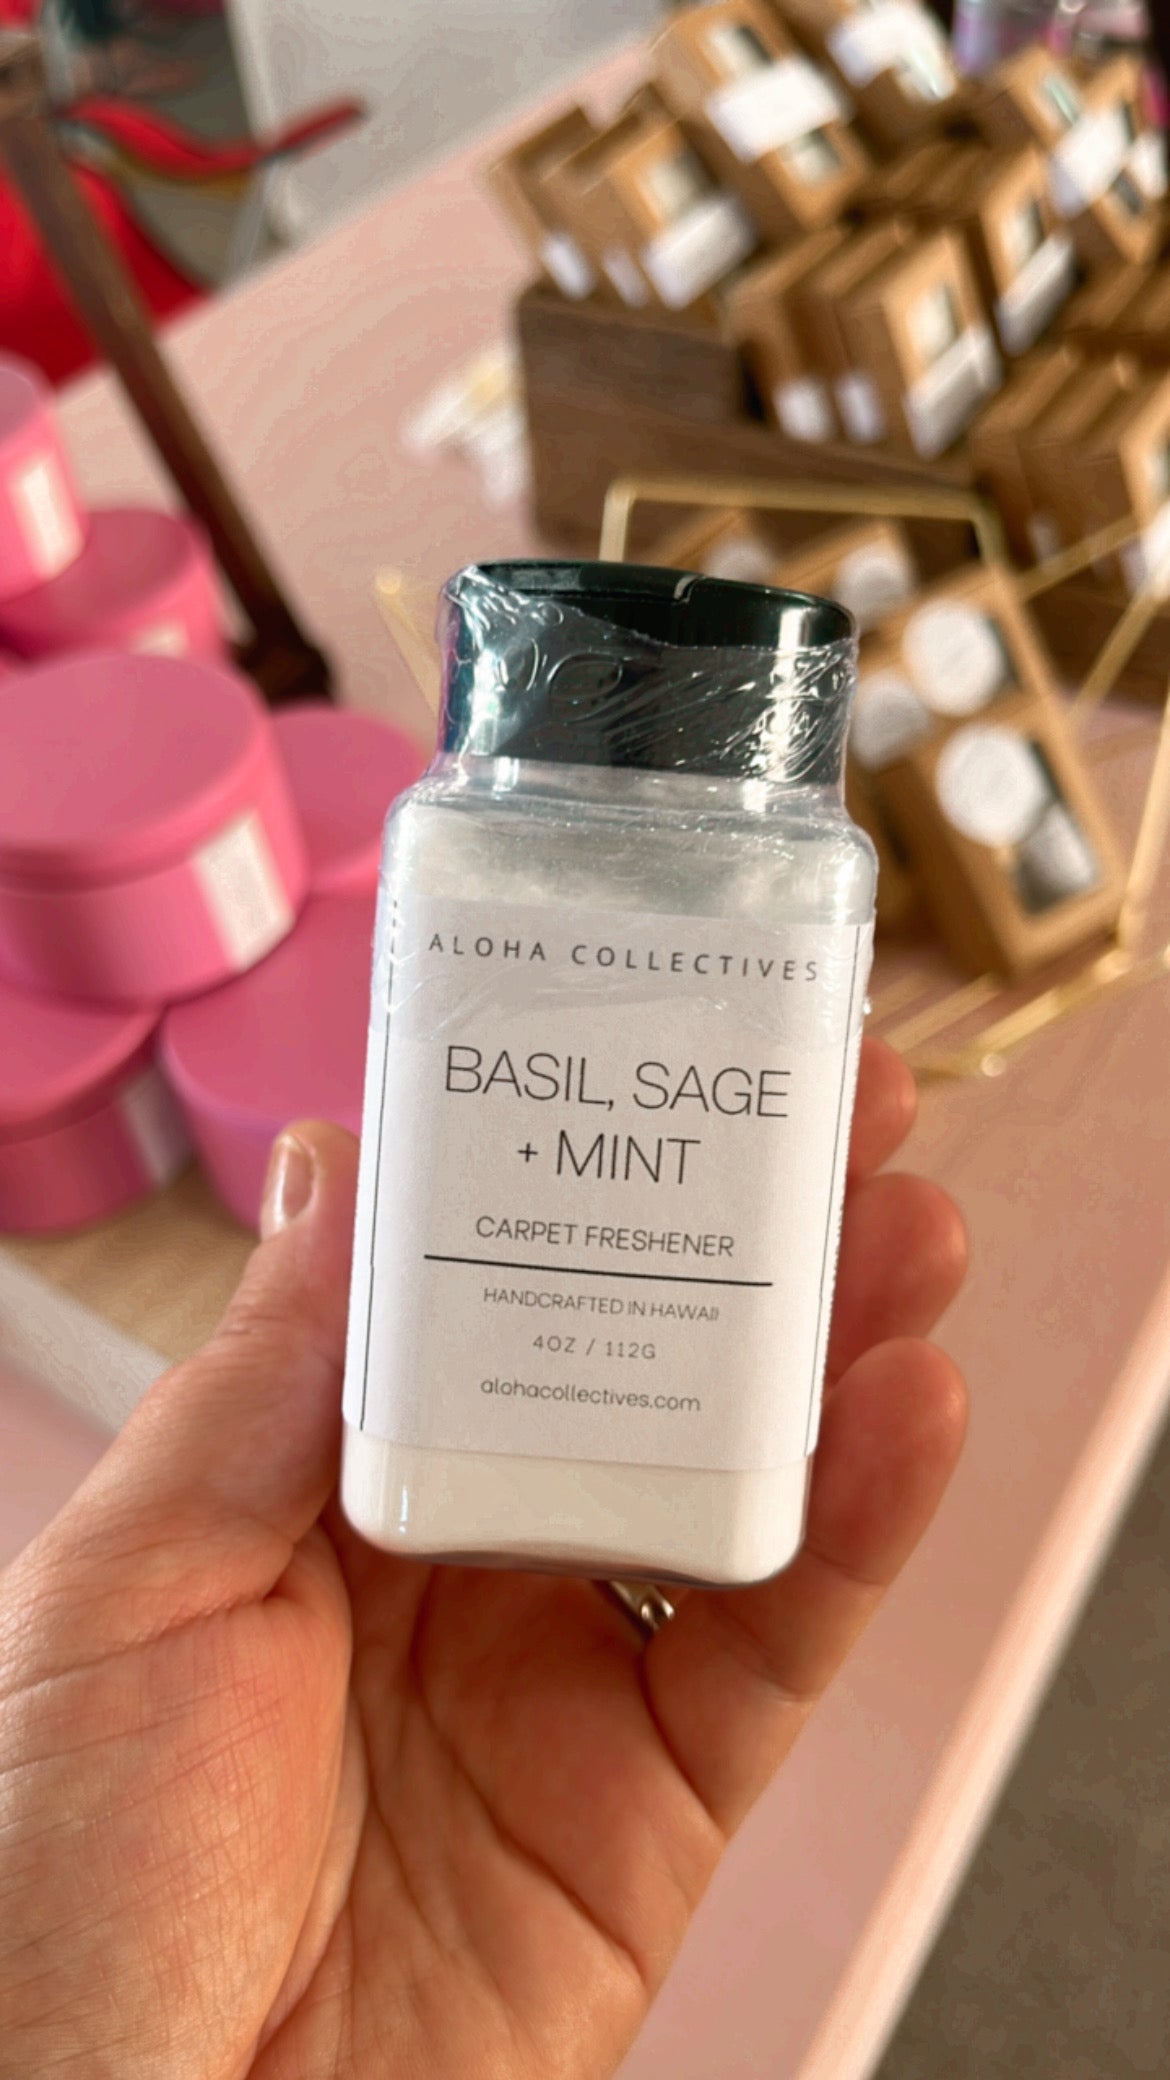 Basil, Safe + Mint, Carpet Freshener